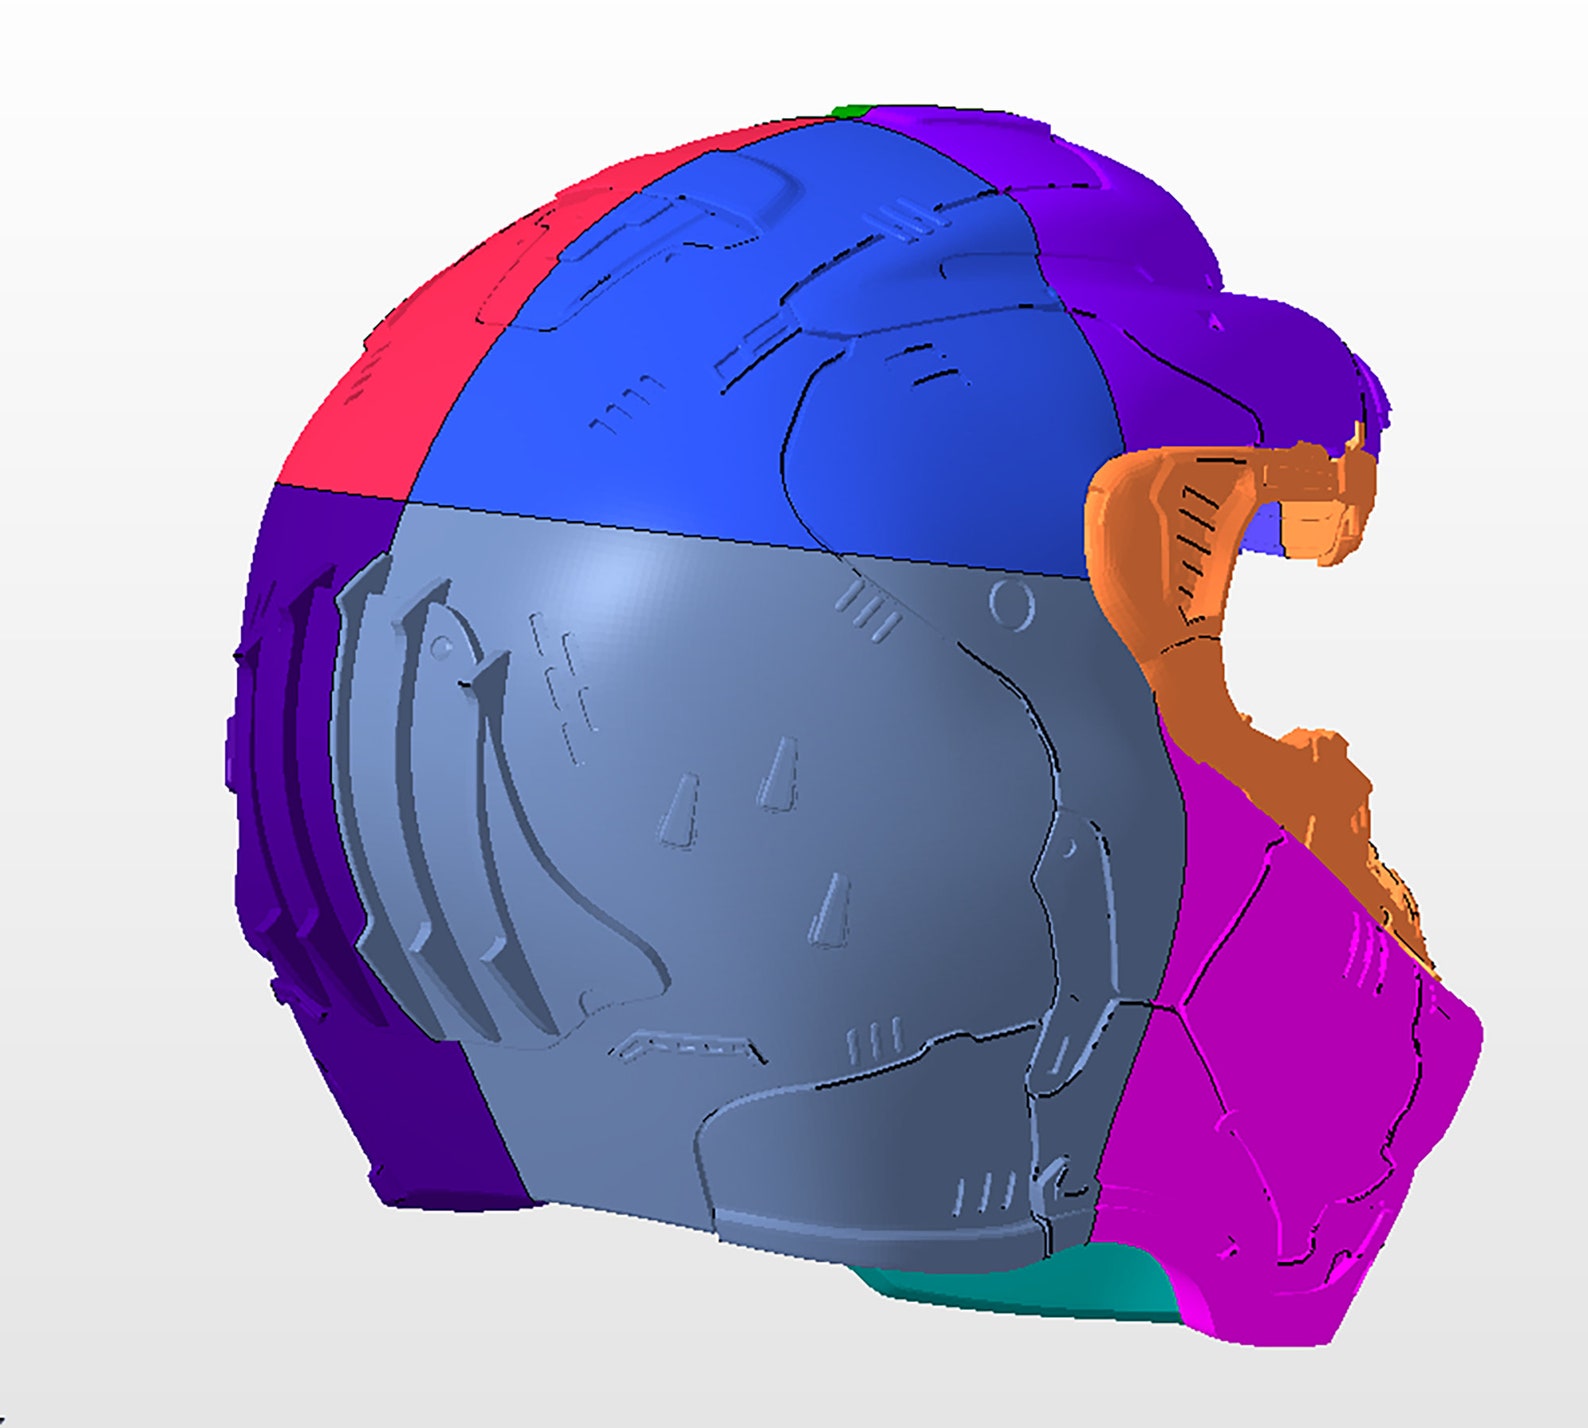 Doom Eternal Helmet Wearable 3D Model STL Special Gift - Etsy